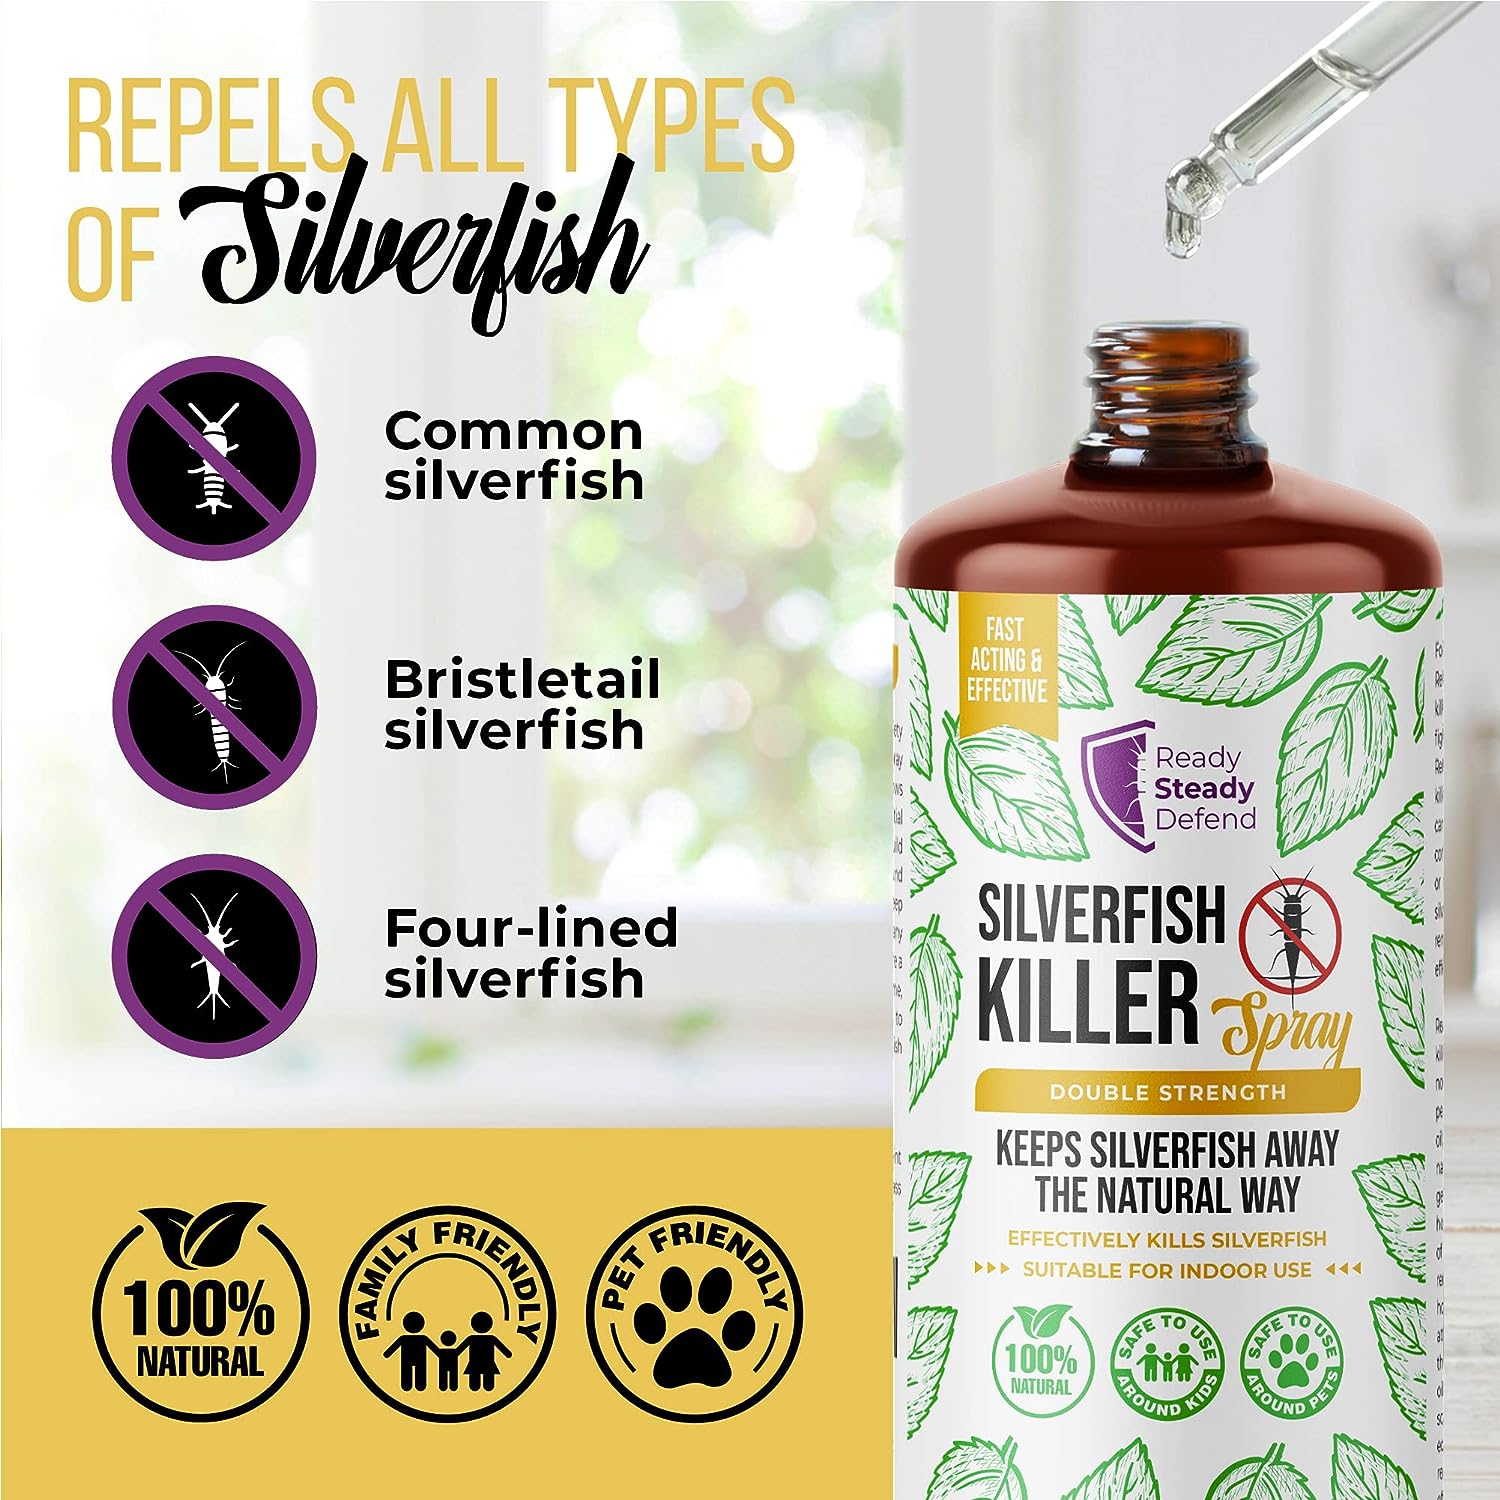 Natural Silverfish Killer Spray (200ml)